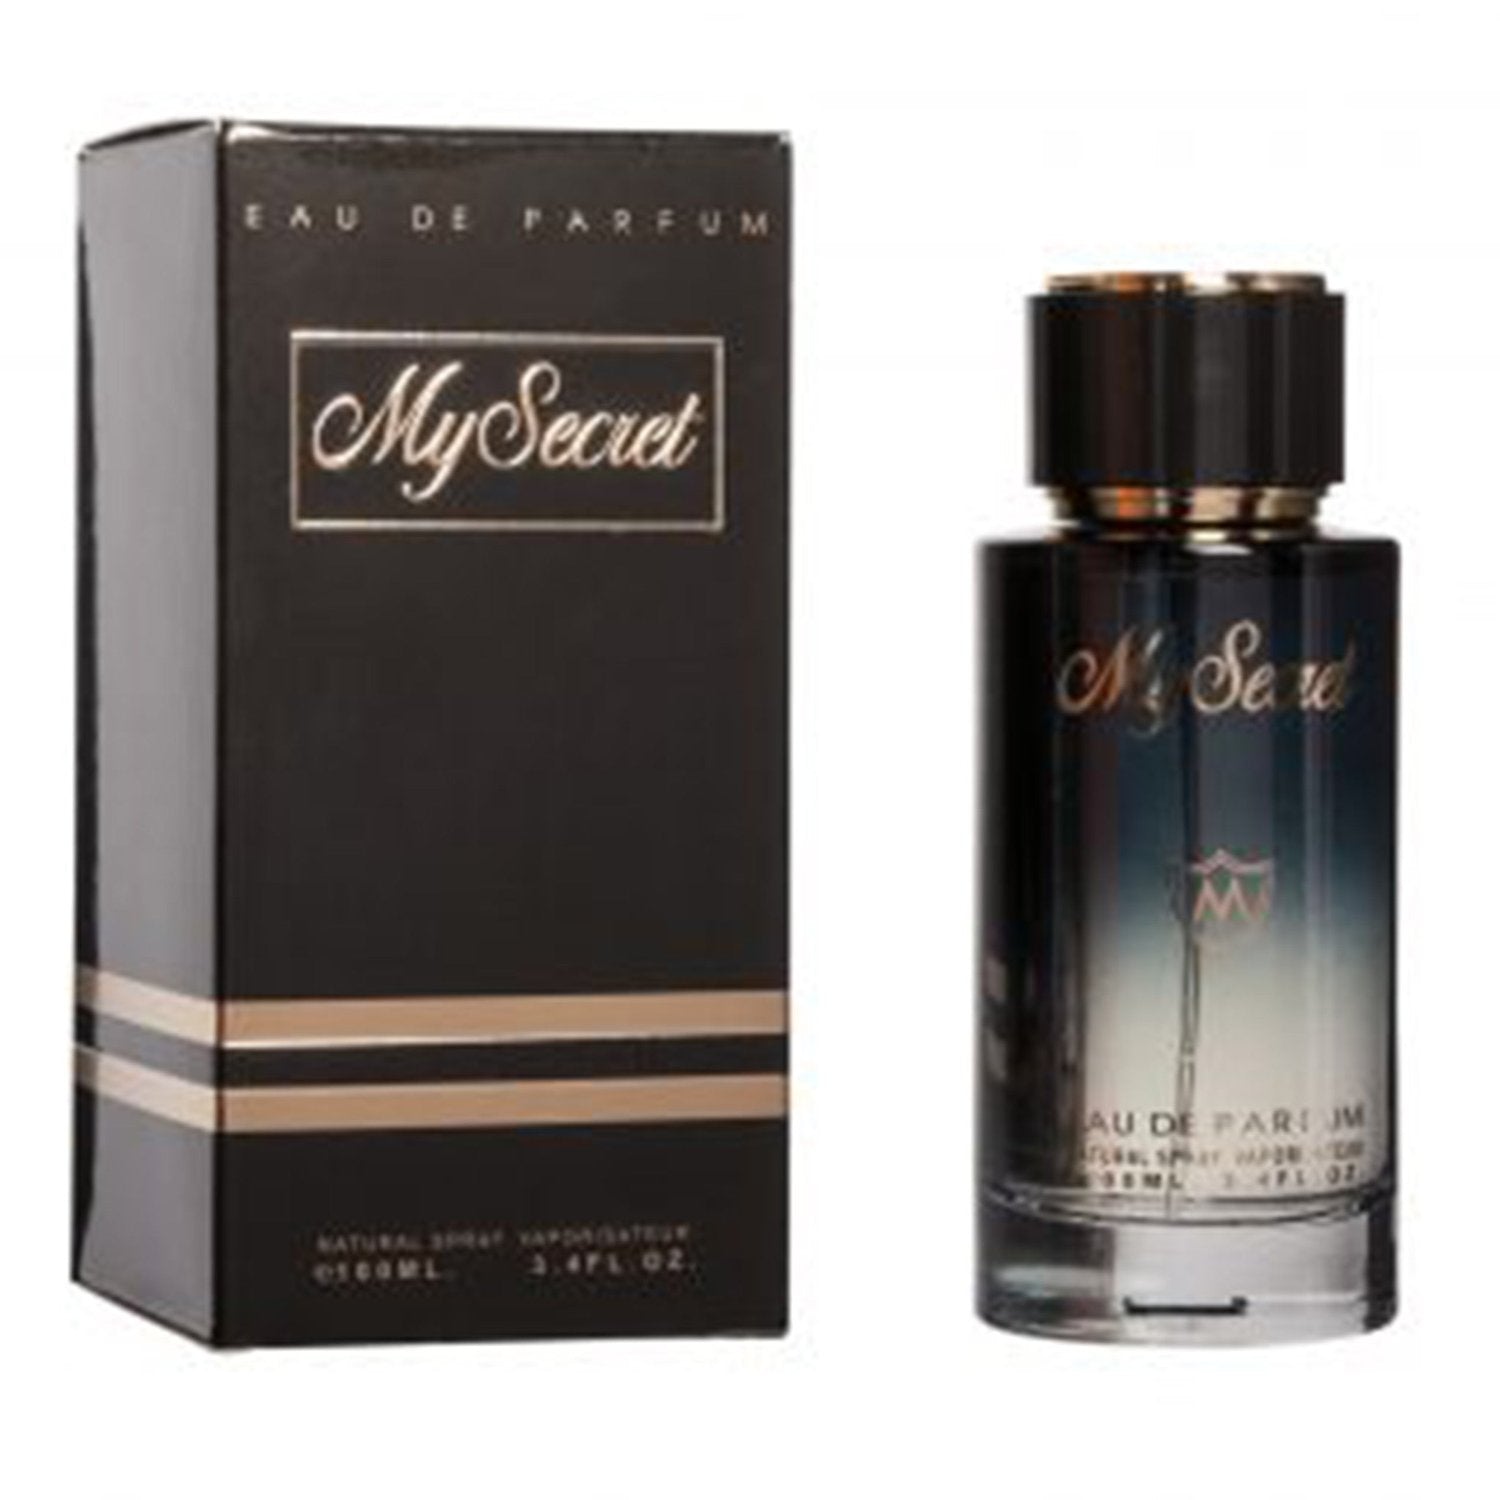 My Secret Eau De Parfum Made in France 100 ml Value Pack of 3 